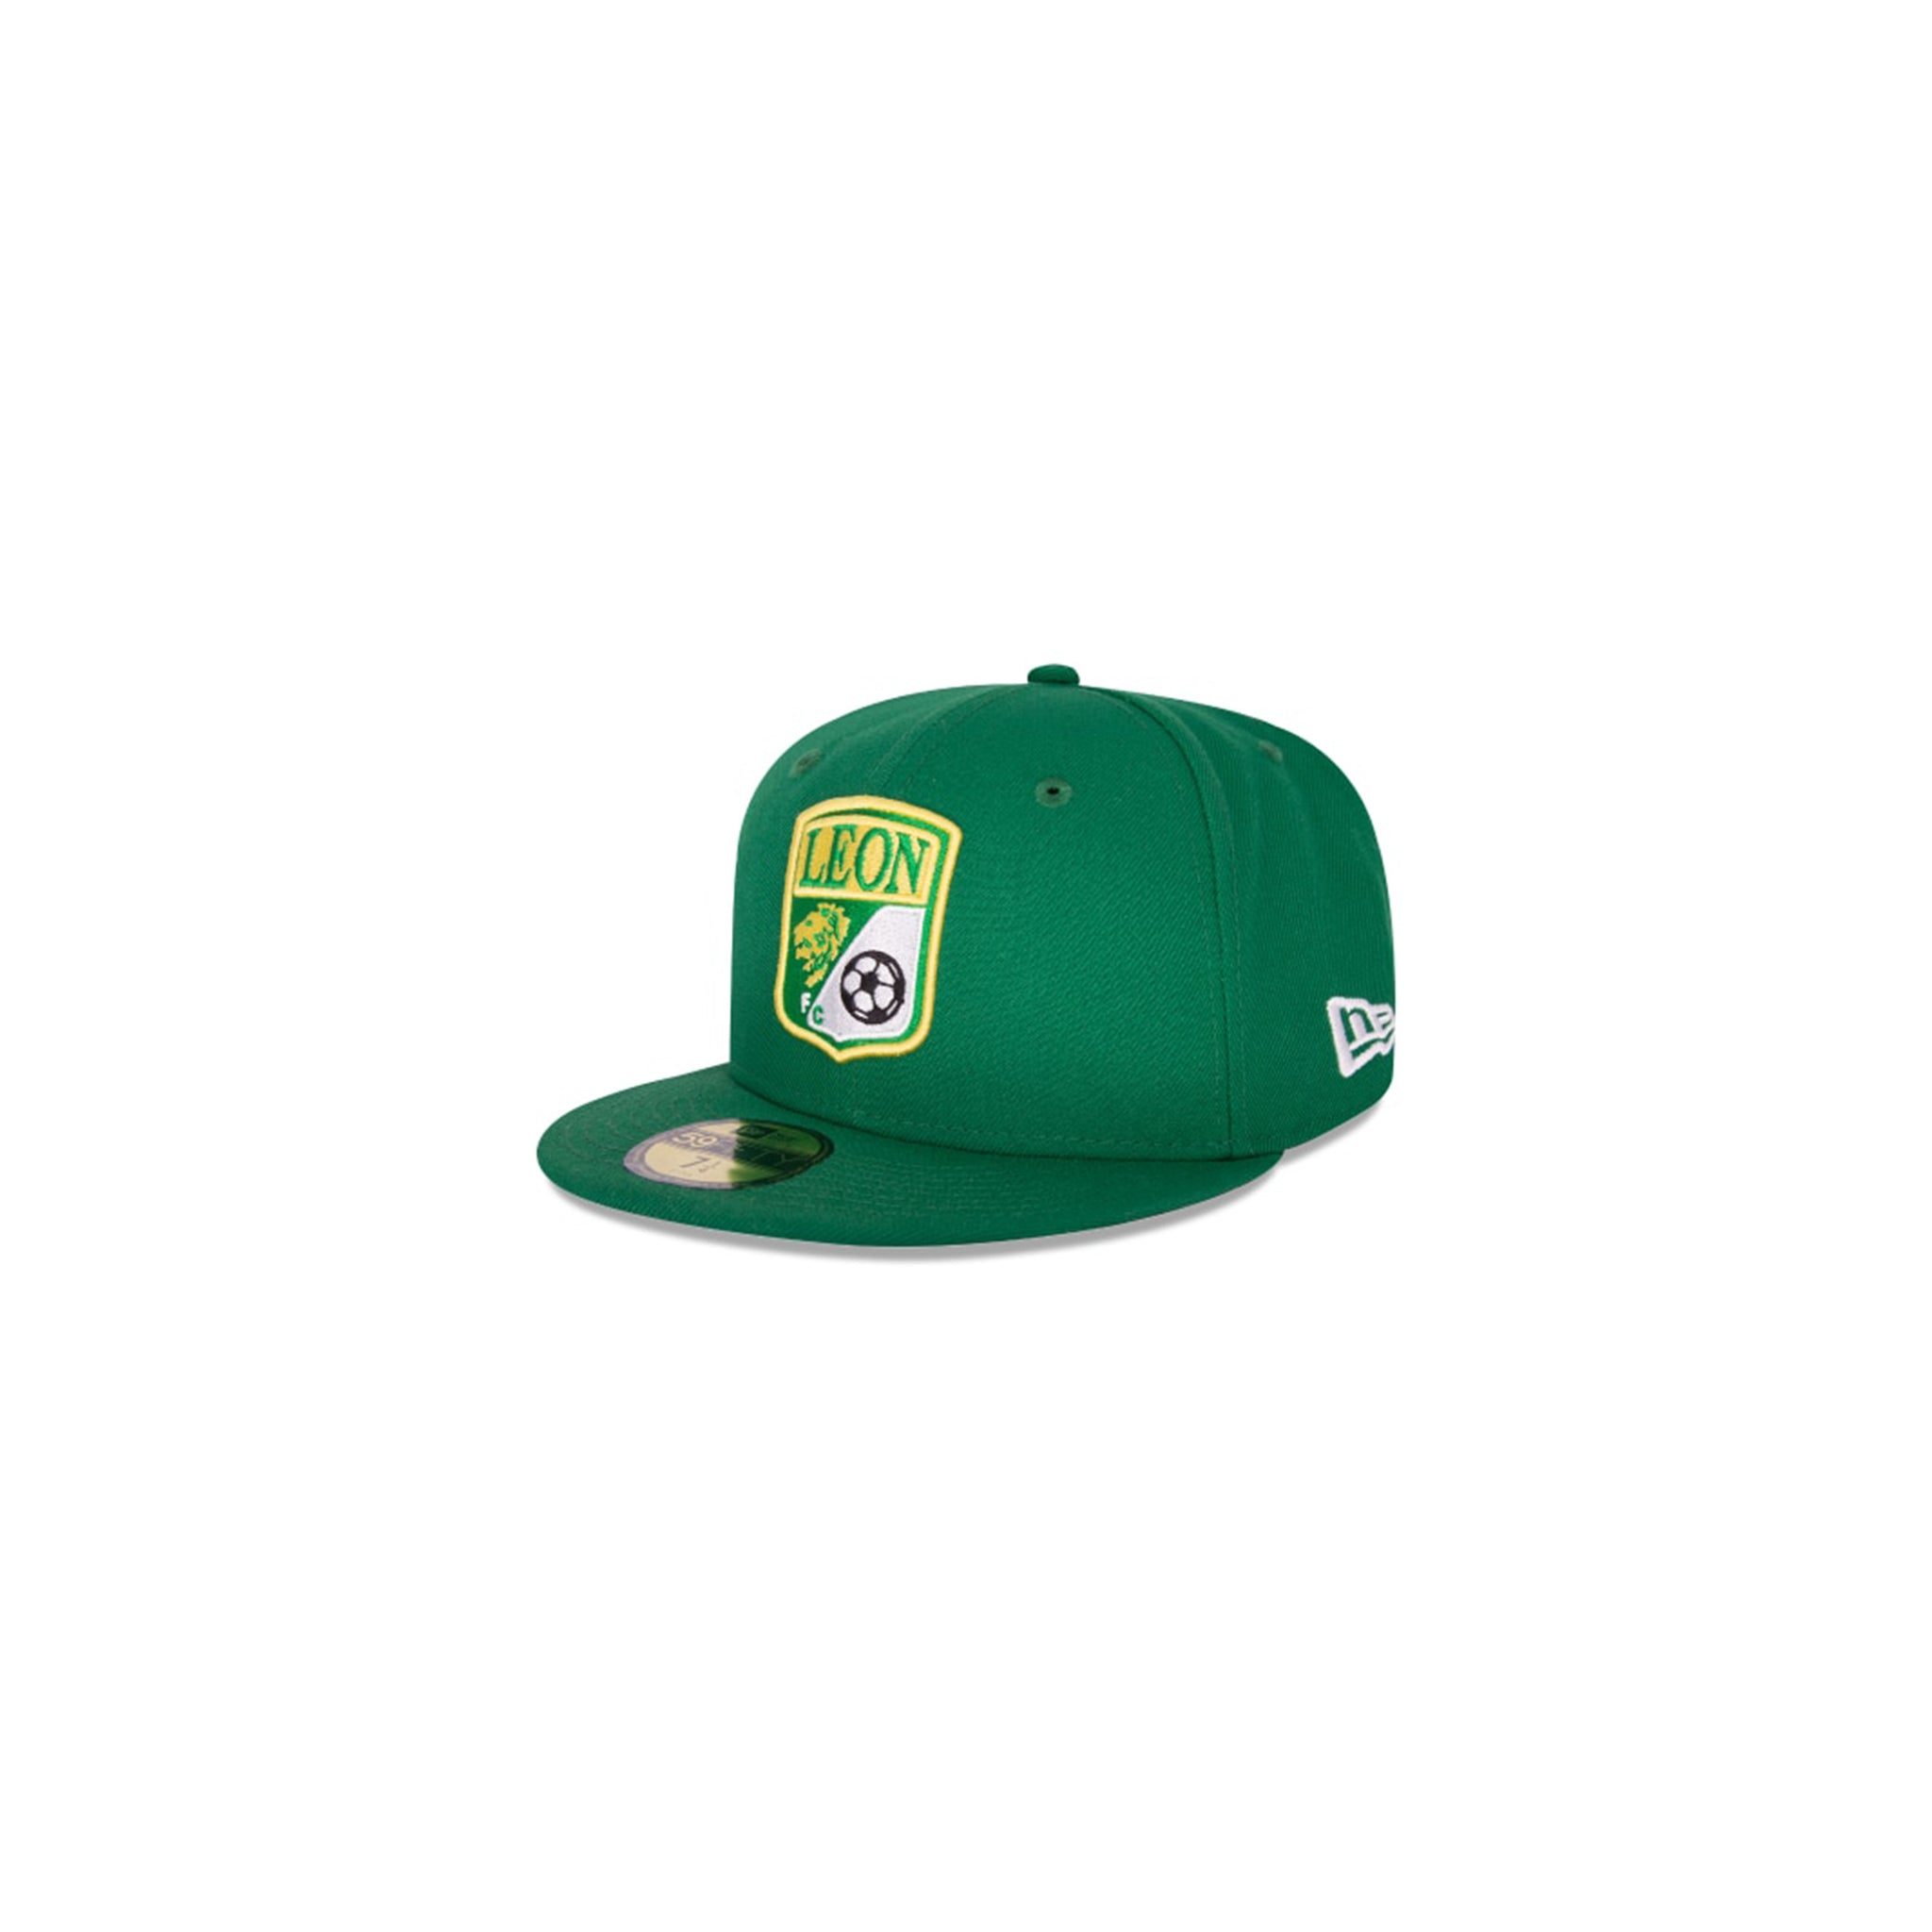 •NEW• World Baseball Classic 2013 Puerto Rico Champions New Era Hat Cap